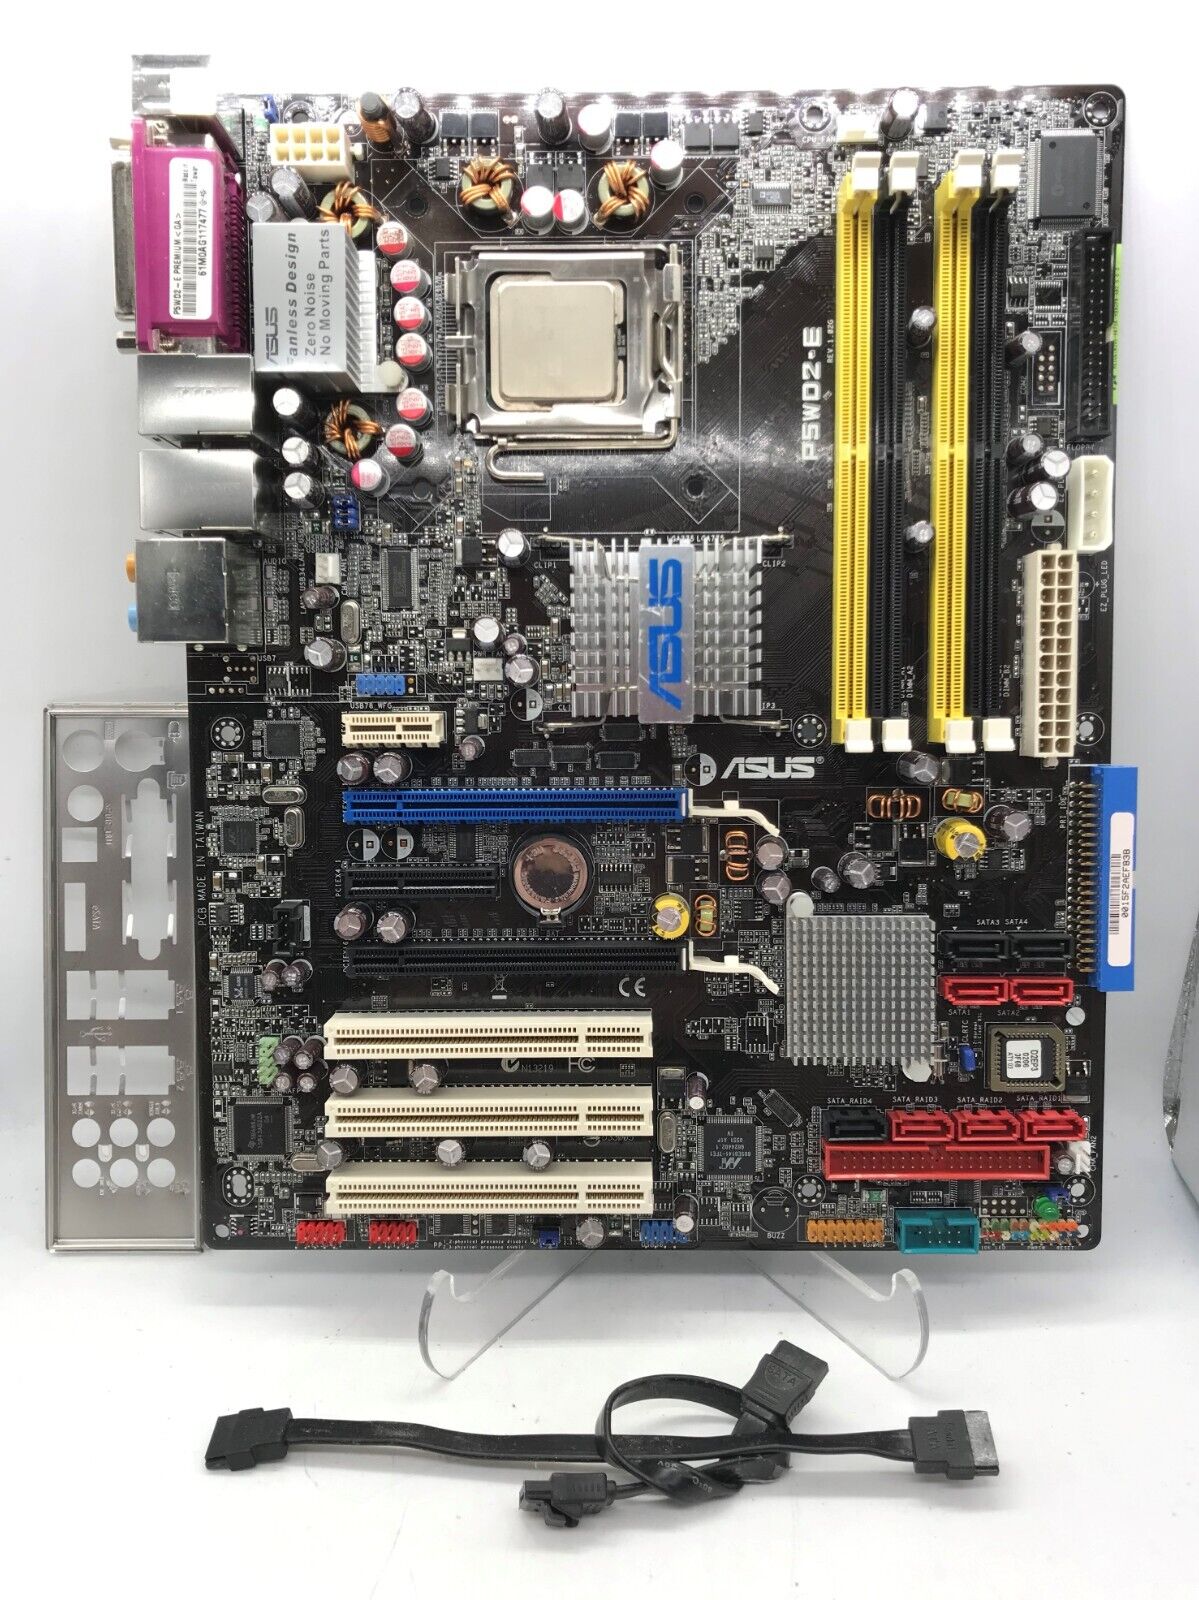 ASUS P5WD2-E Premium Motherboard 975X LGA 775 DDR2 ATX Intel Pentium D 930 3GHz